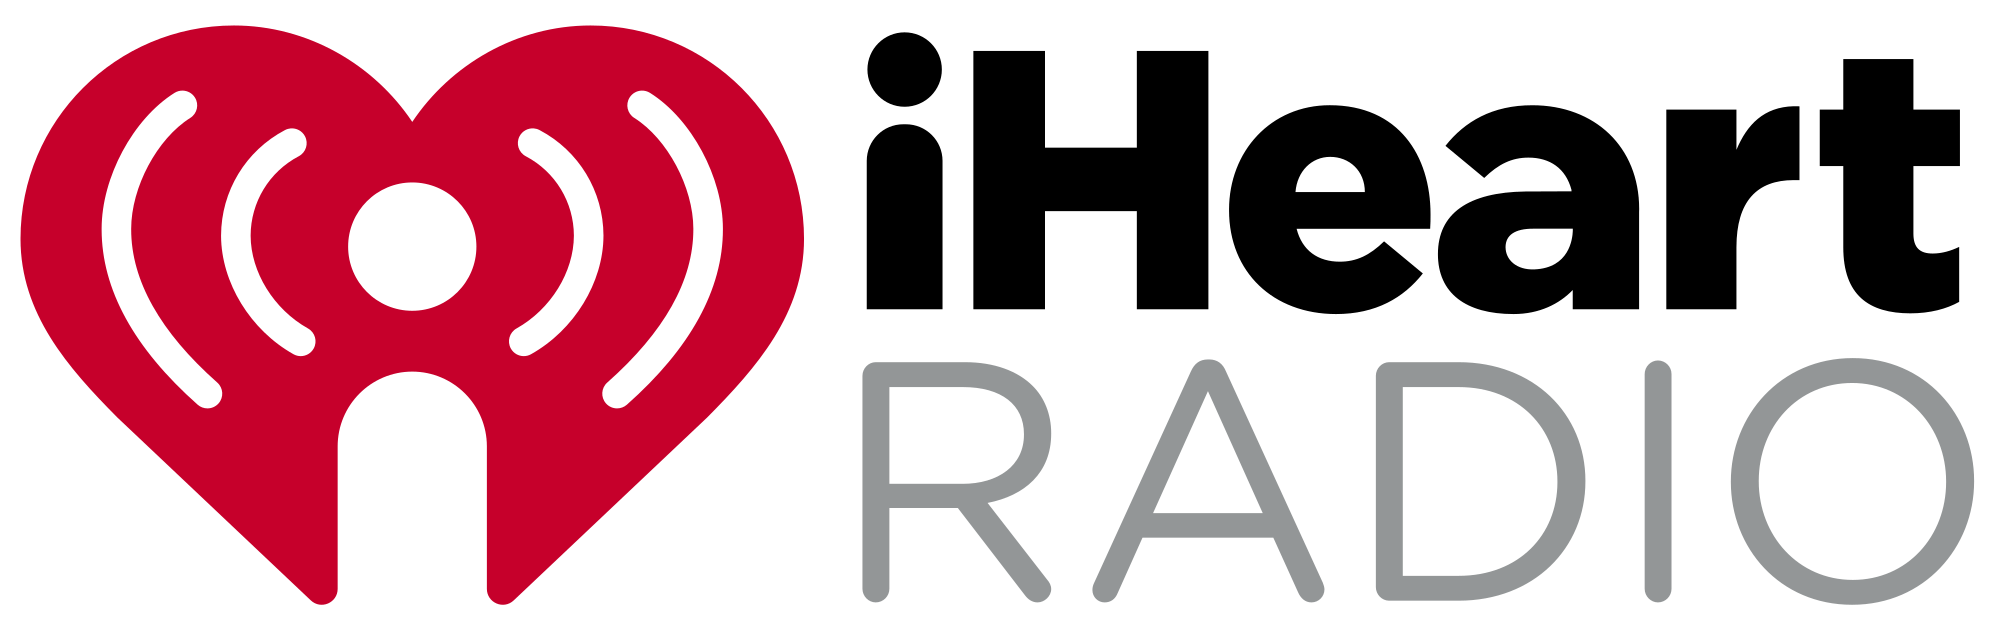 iHeartRadio Logo - IHeartRadio logo.svg